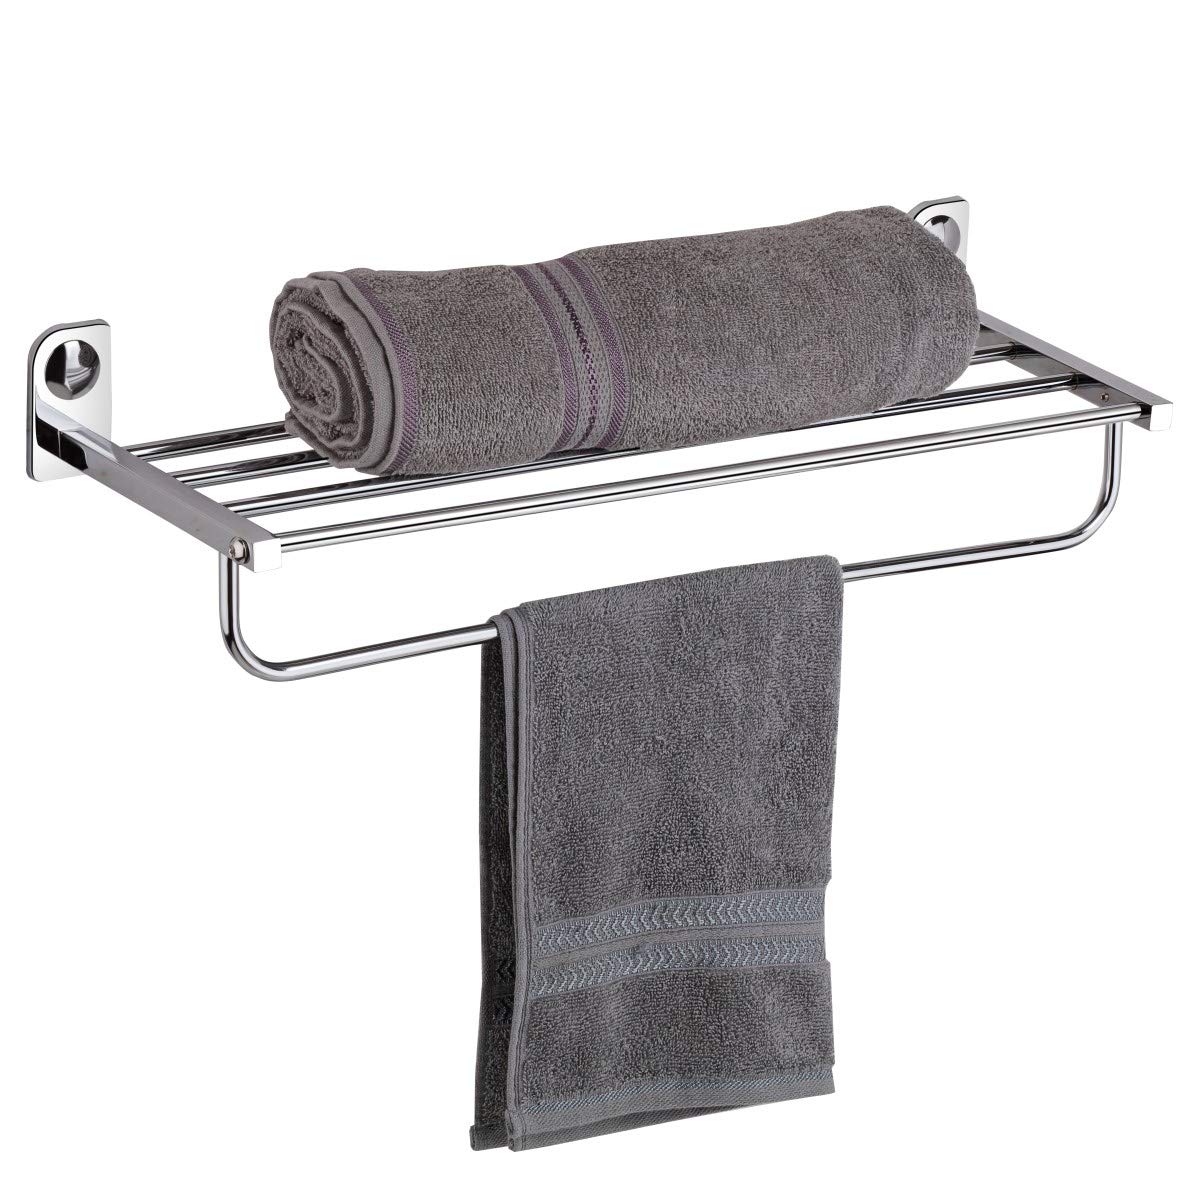 Plantex Dream Stainless Steel Towel Rack for Bathroom/Towel Stand/Towel Hanger/Bathroom Accessories (24 Inch-Chrome) - Pack of 4